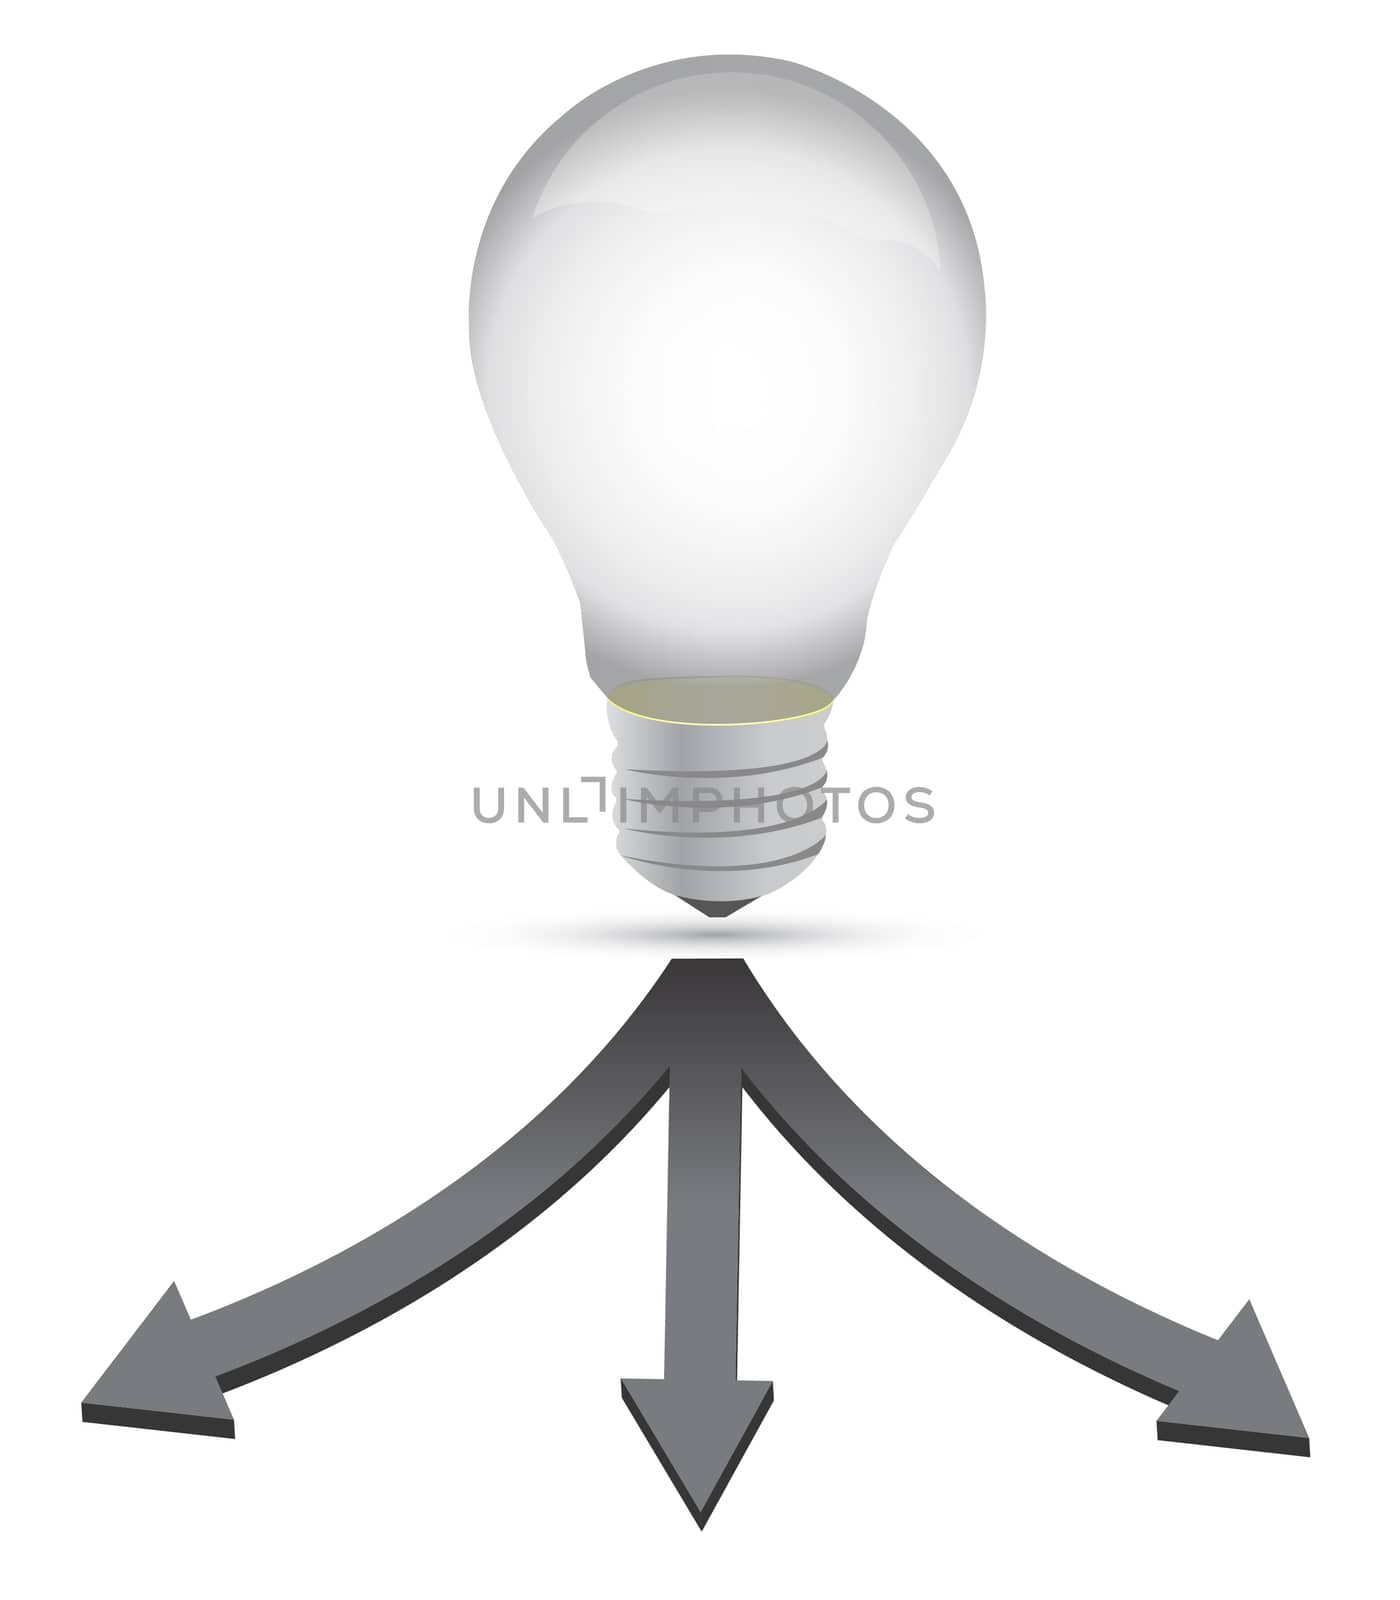 ideal destination lightbulb concept illustration over white